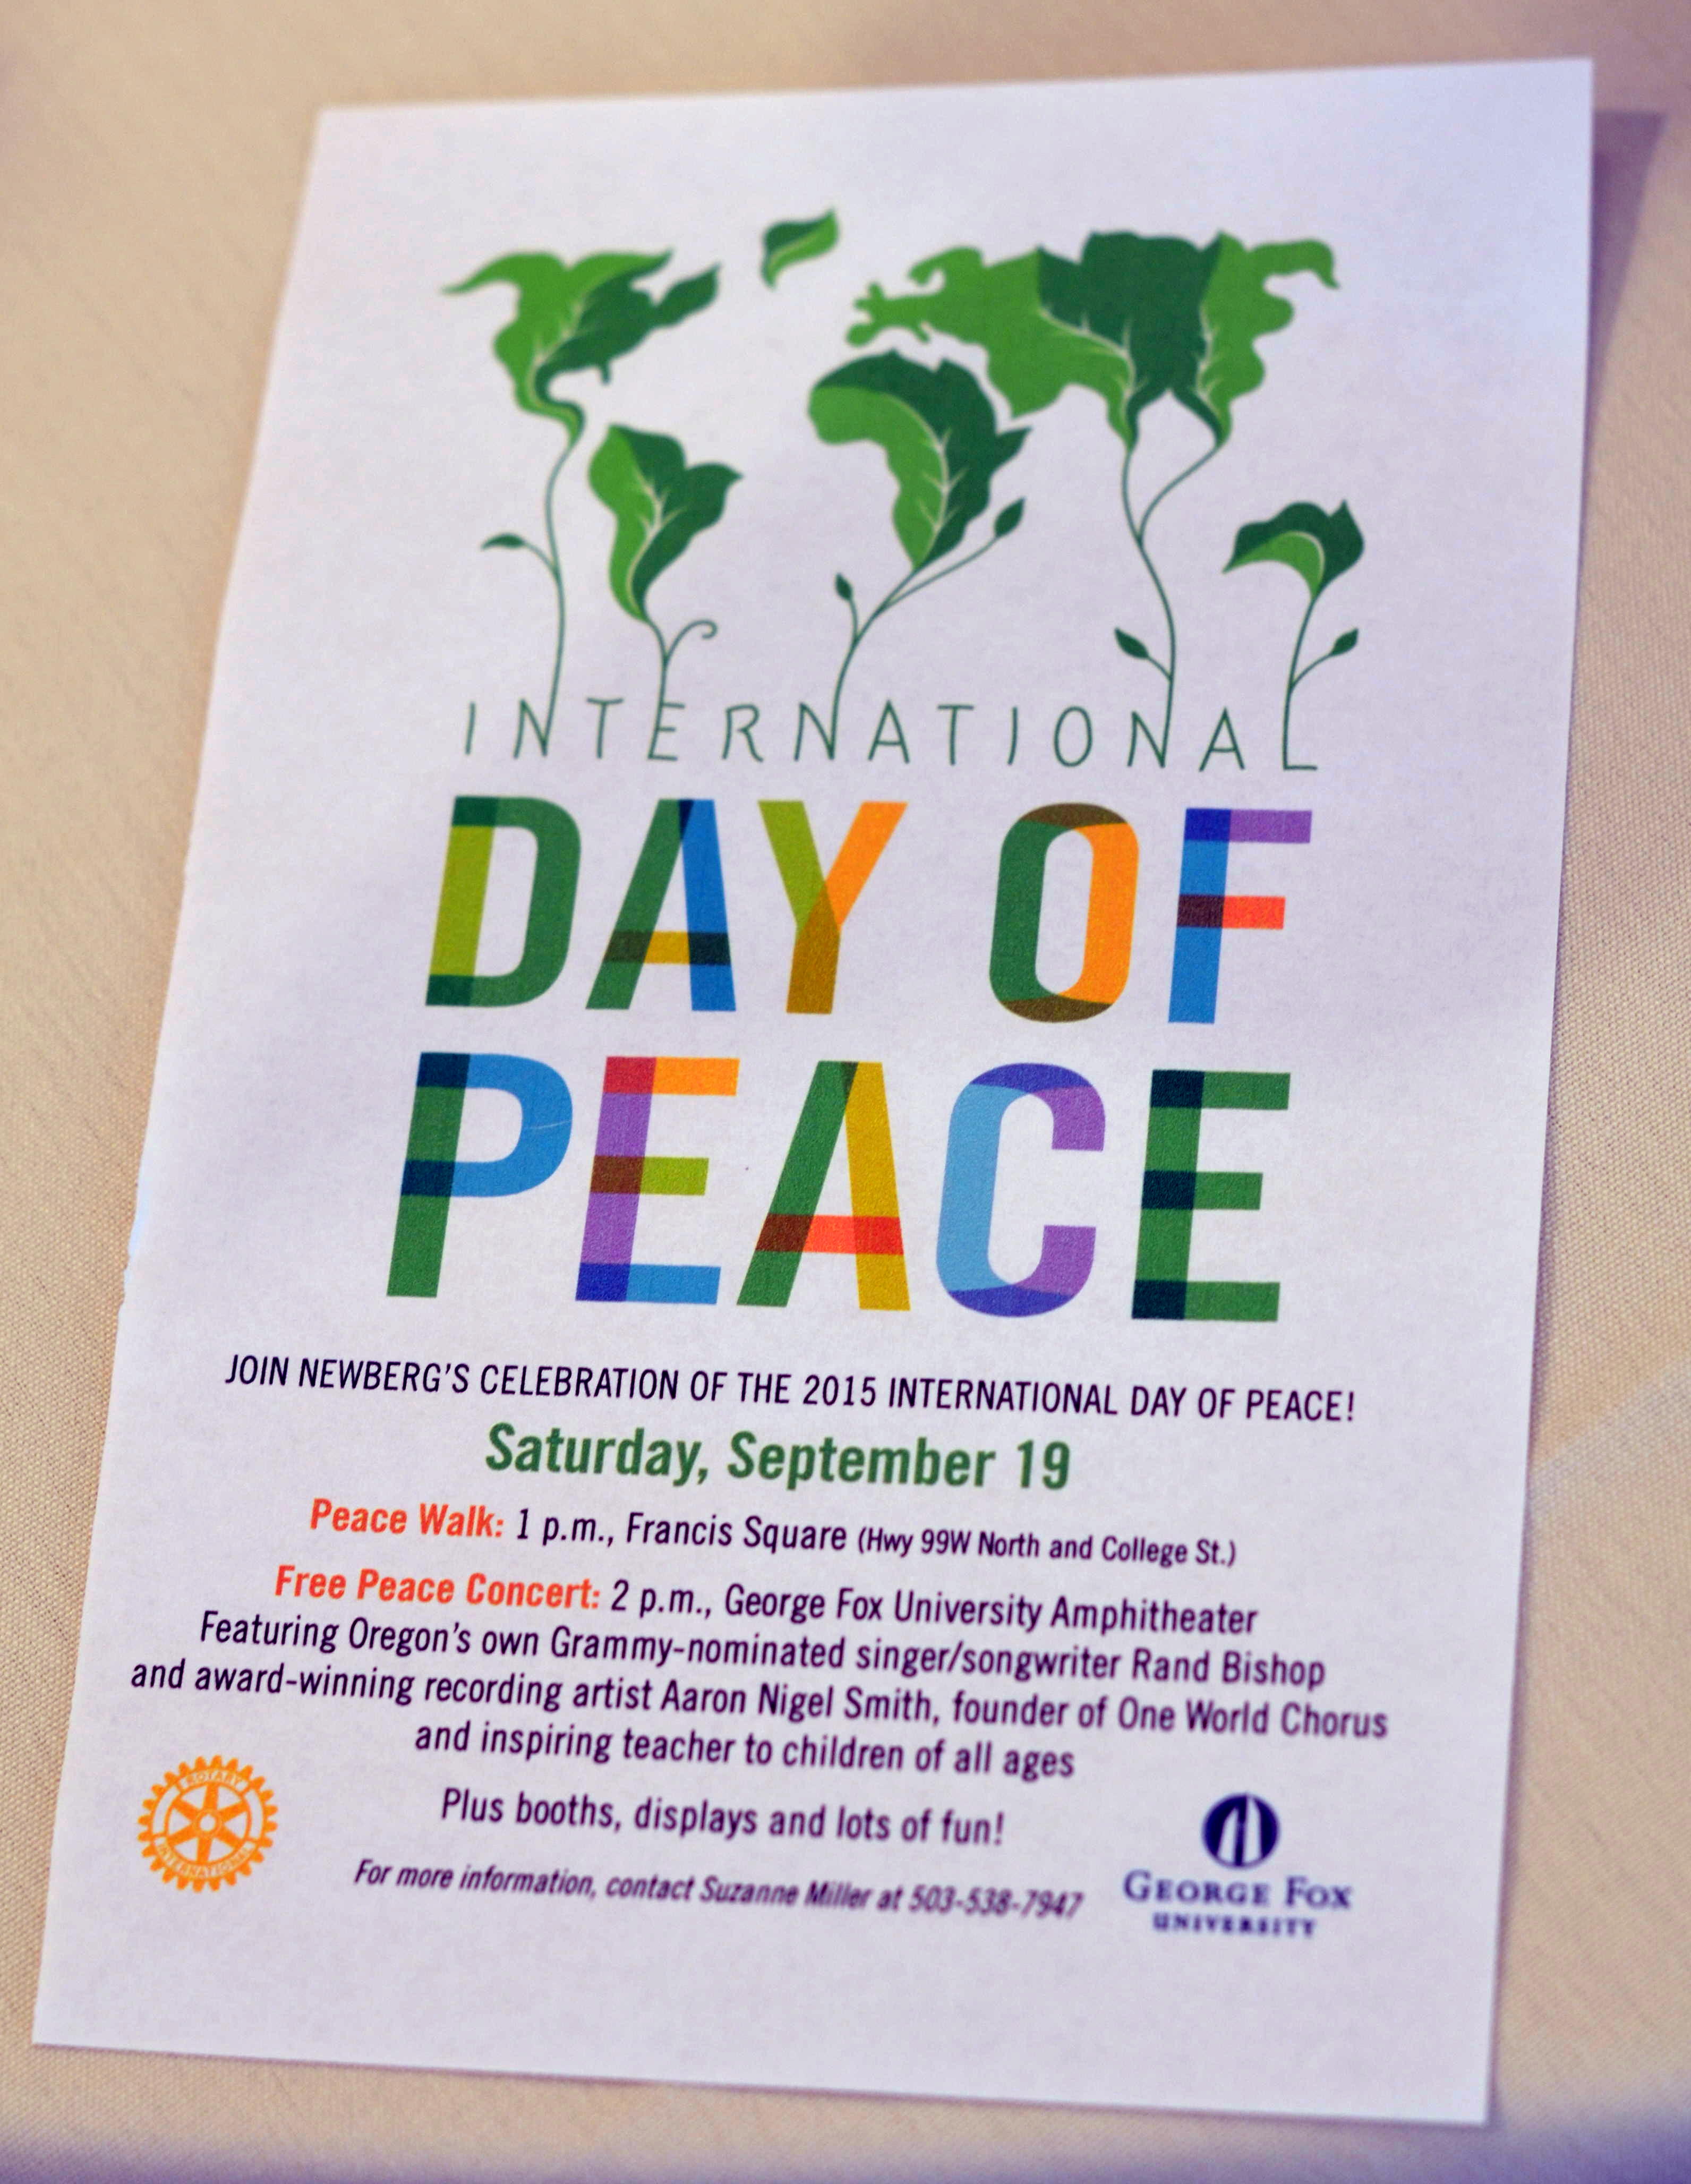 International Day of Peace invitation card